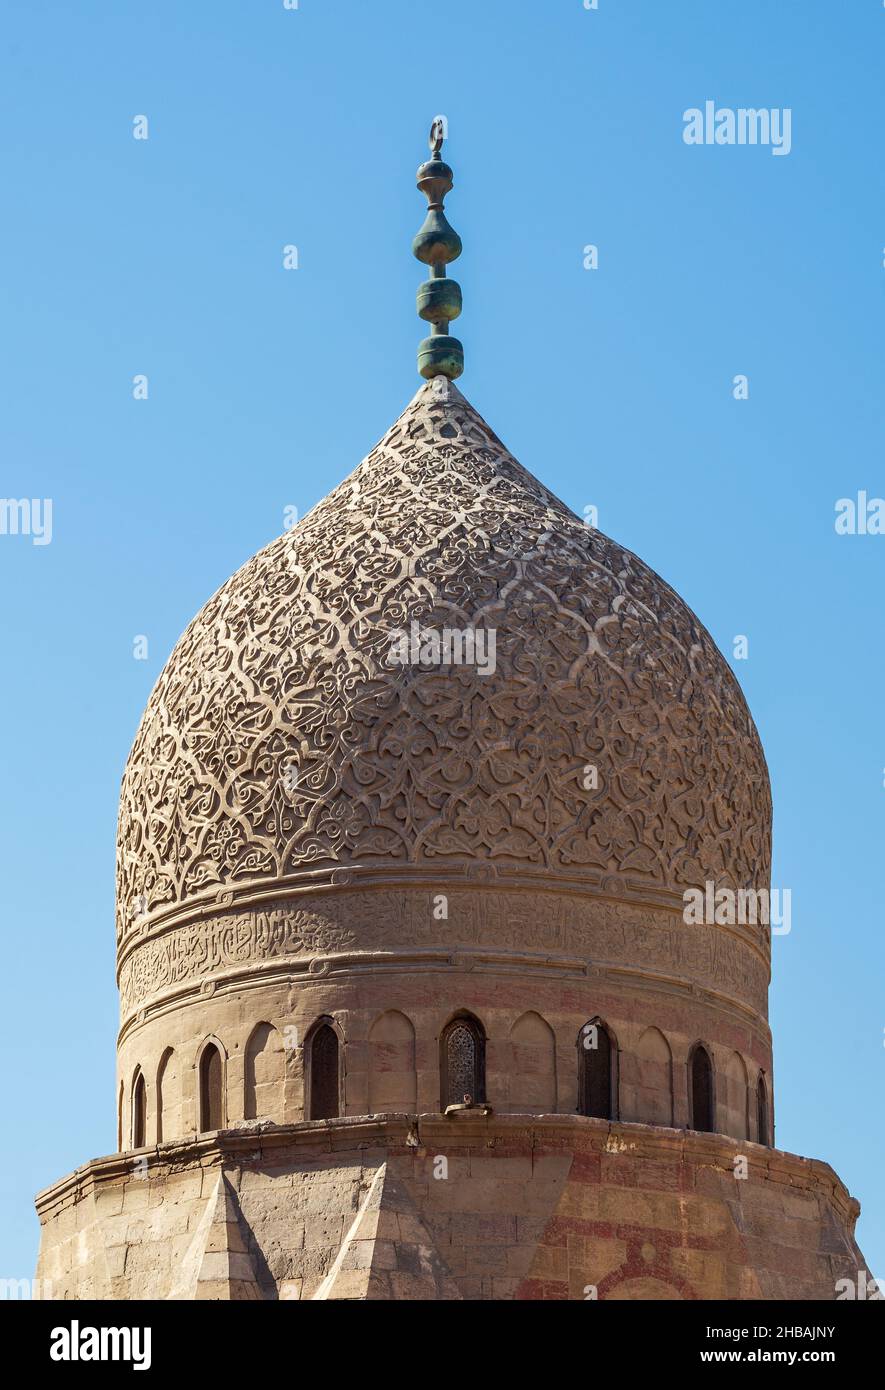 Dome of public historic Mamluk era Mosque of Qanibay AlRamah, Cairo Citadel Square, Old Cairo, Egypt Stock Photo